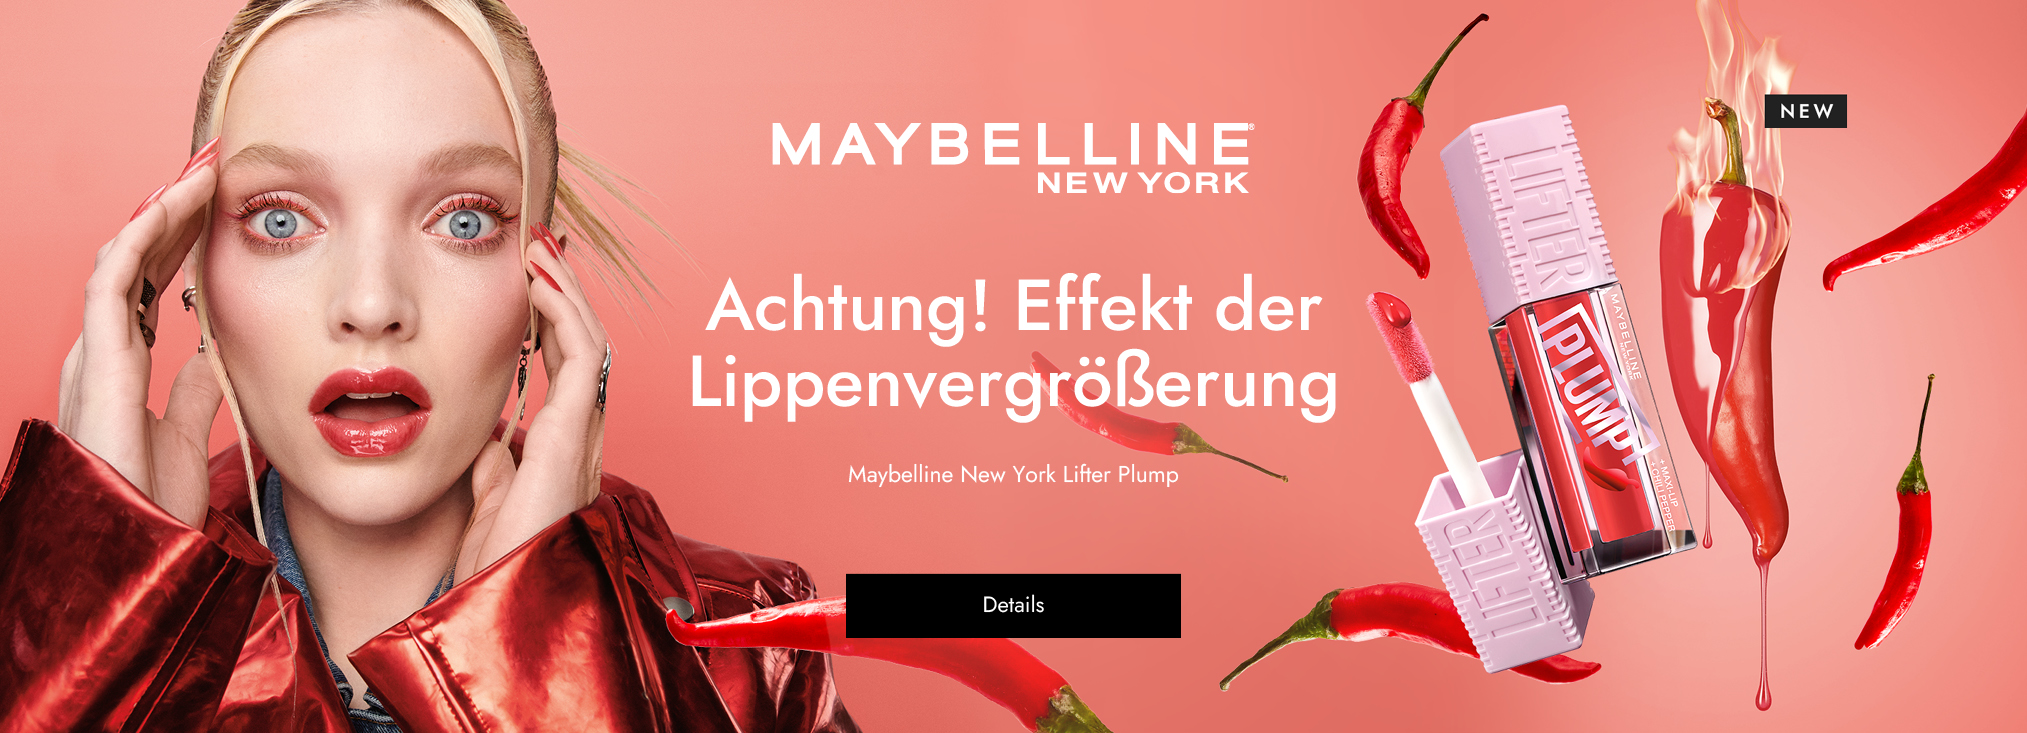 Maybelline_makeup